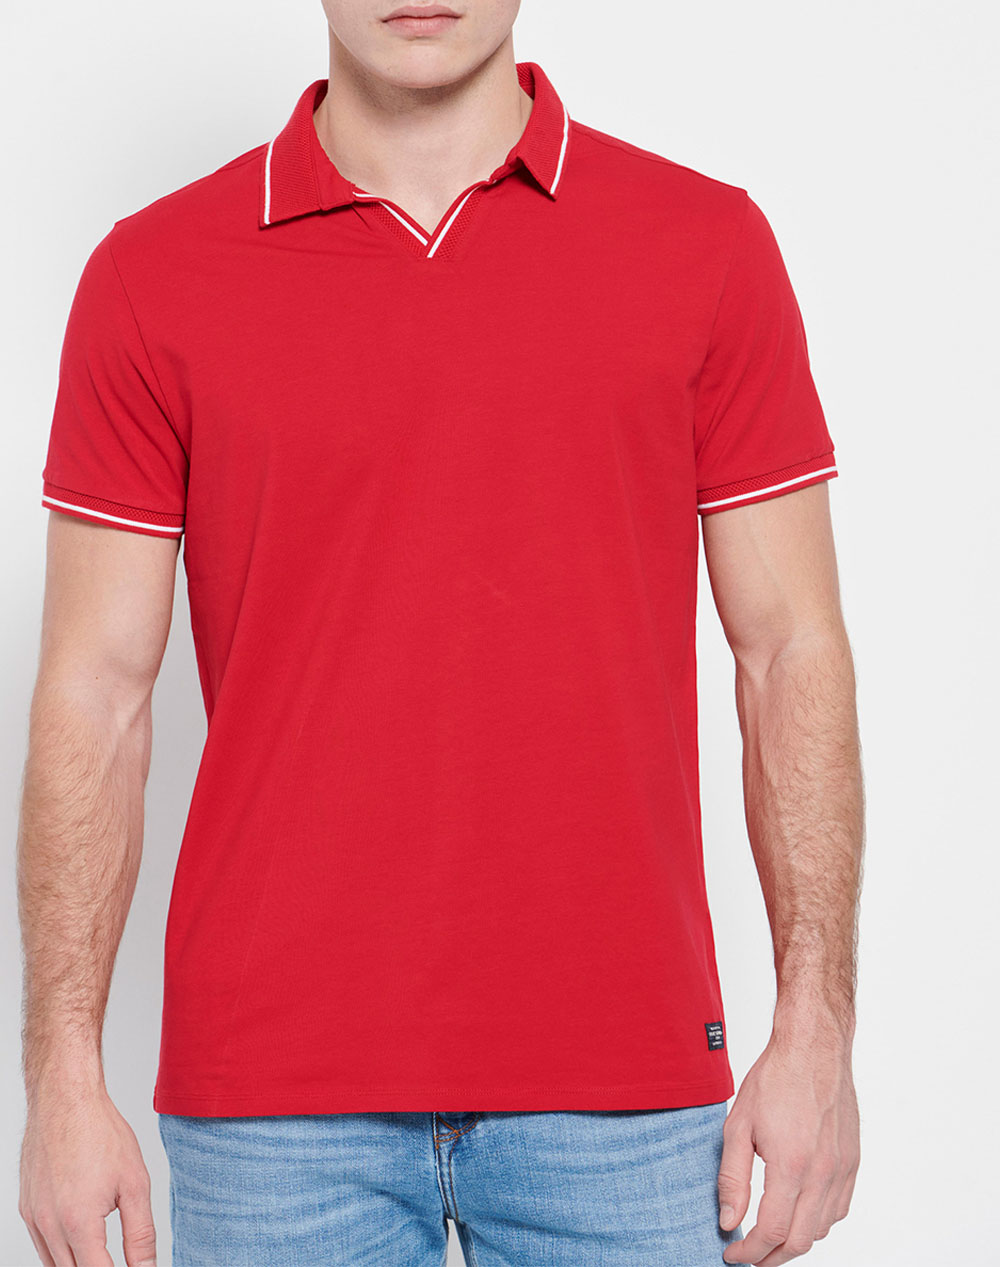 FUNKY BUDDHA Polo μπλούζα με ρίγα στο γιακά FBM007-055-11-RED Red